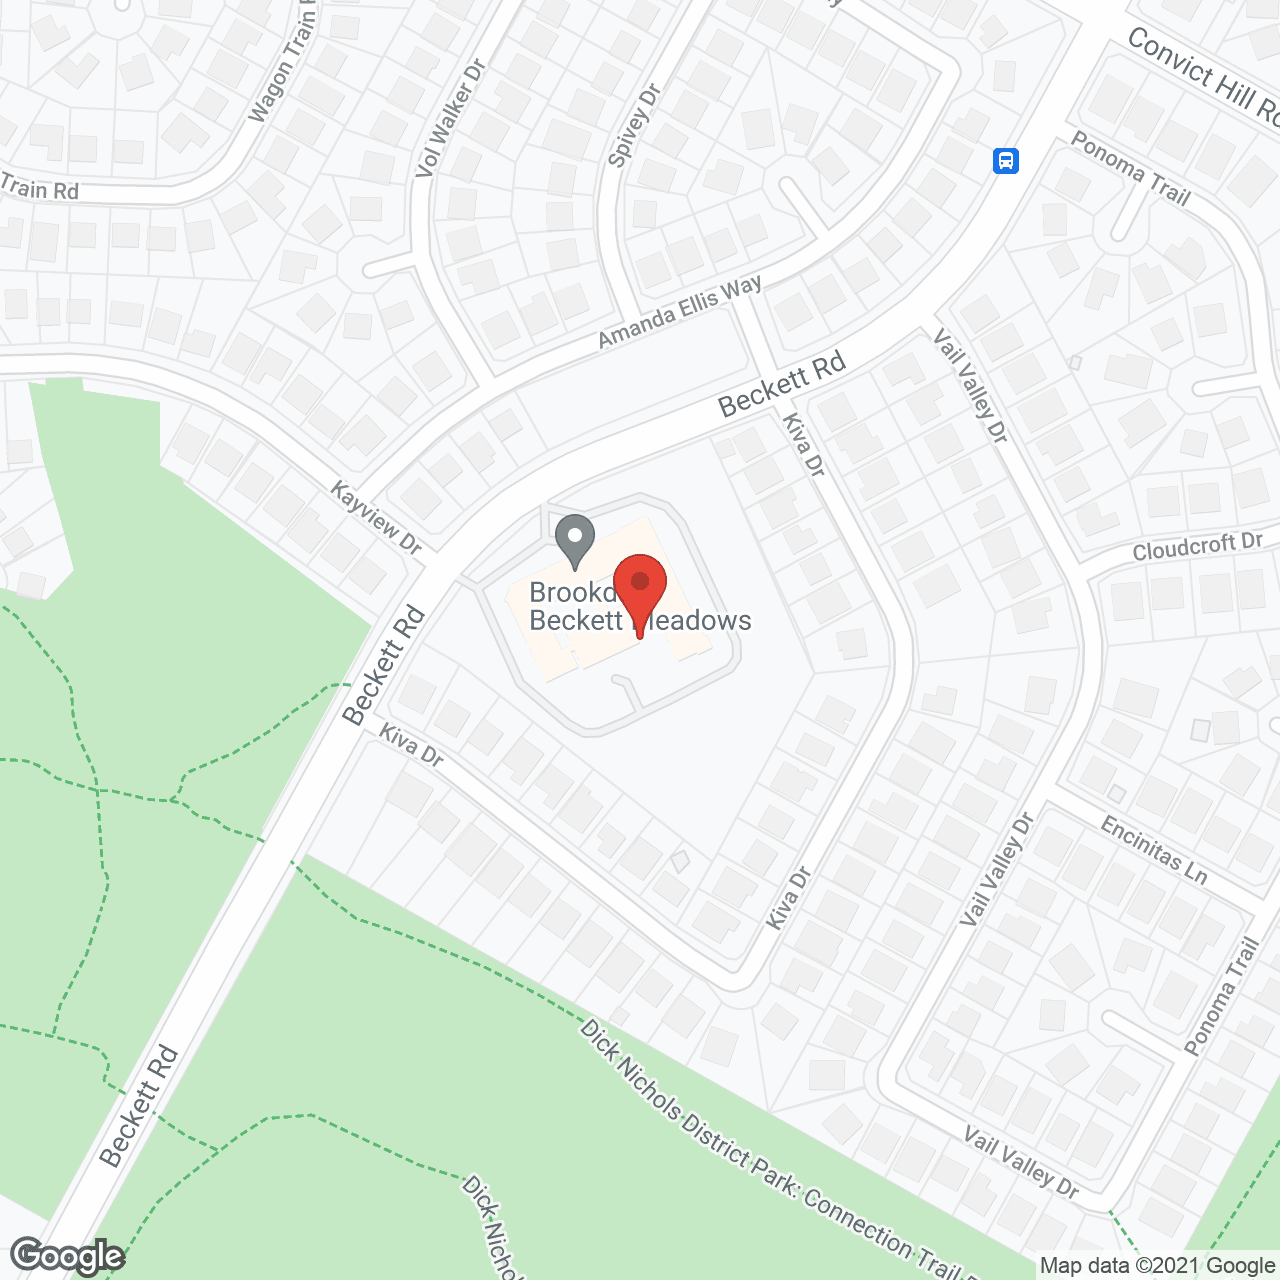 Brookdale Beckett Meadows in google map